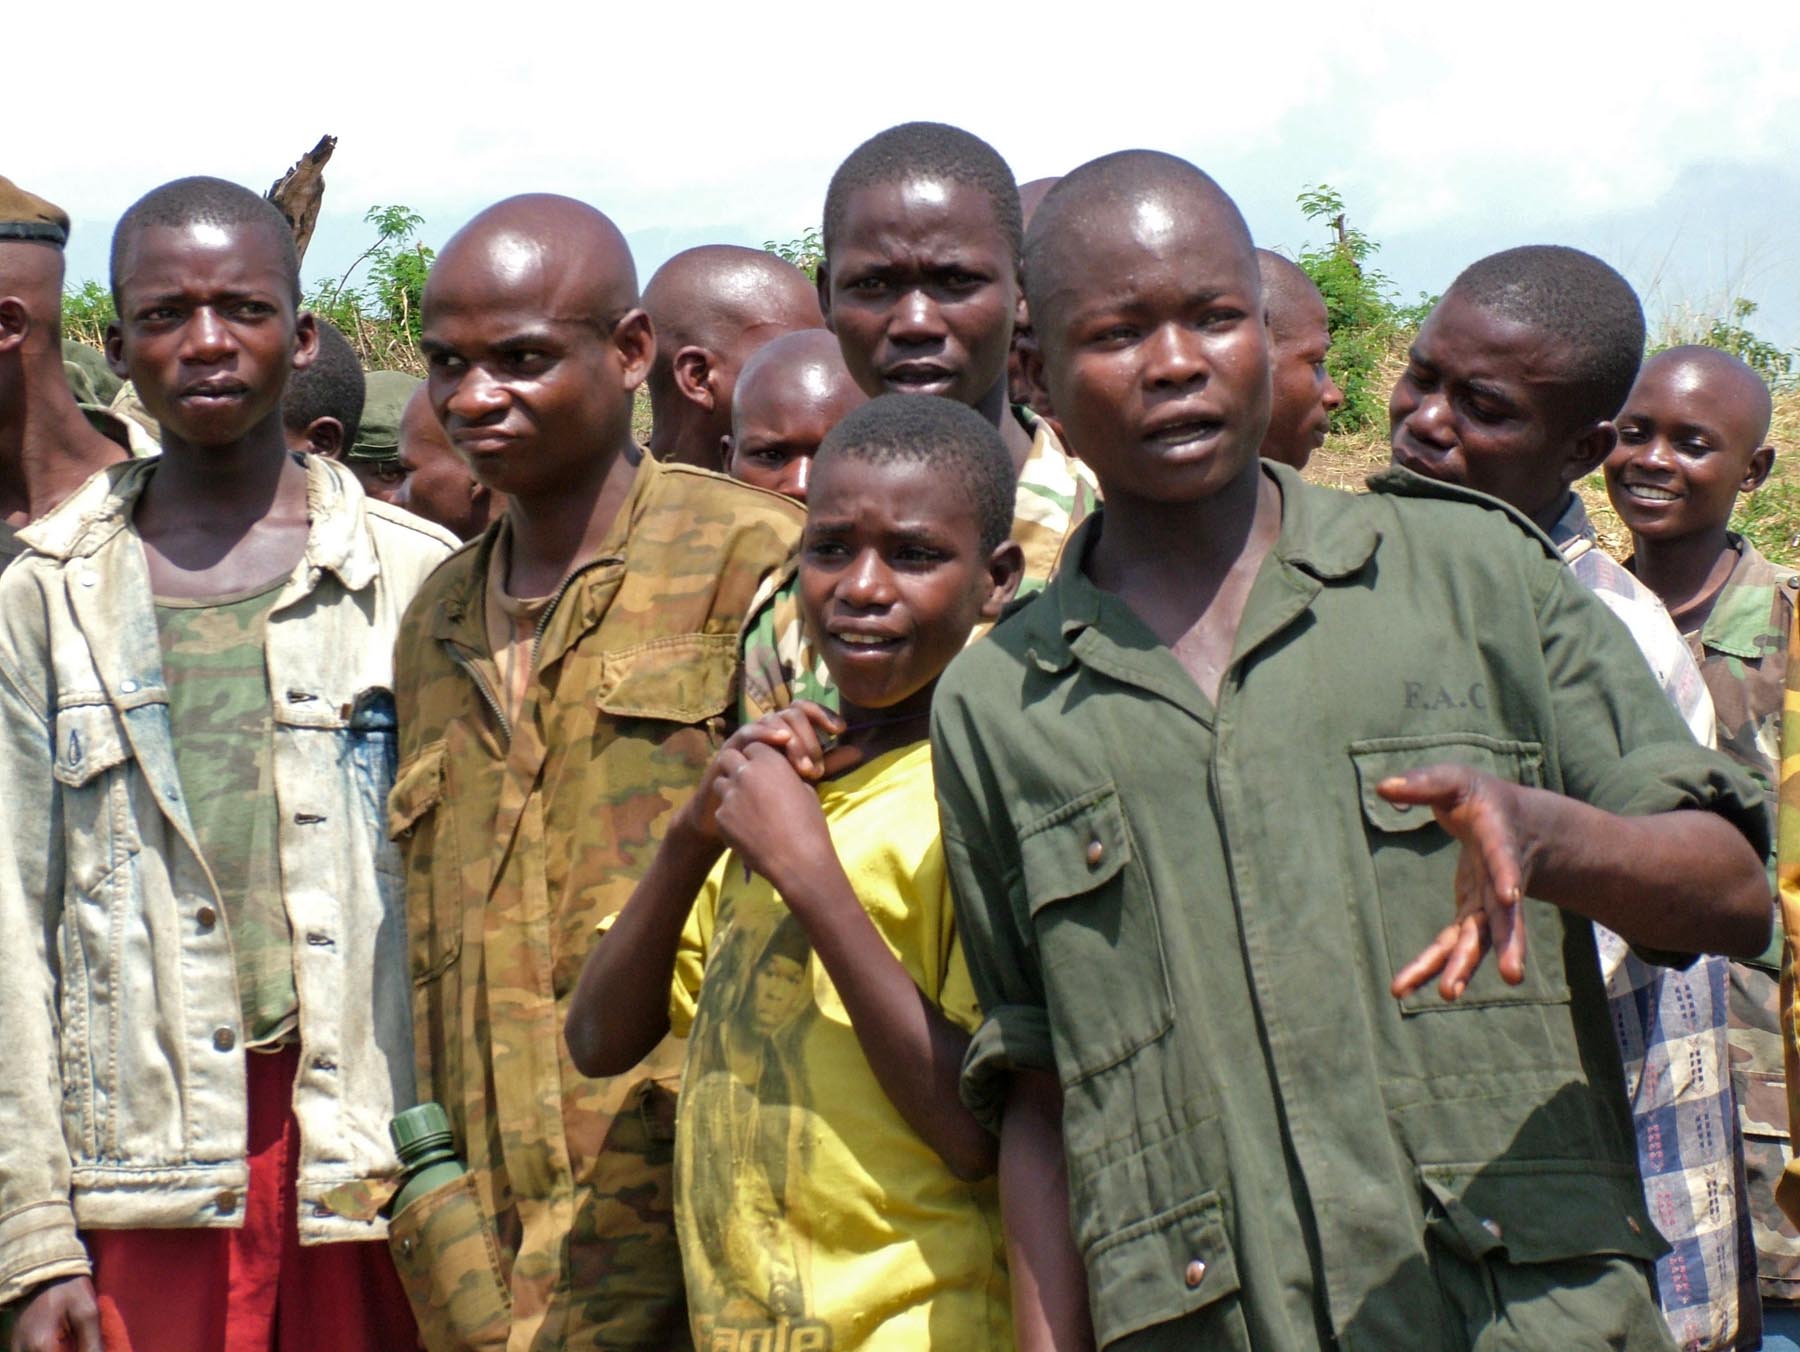 Lapsisotilaita Kongossa. Kuva: Wikimedia Commons.